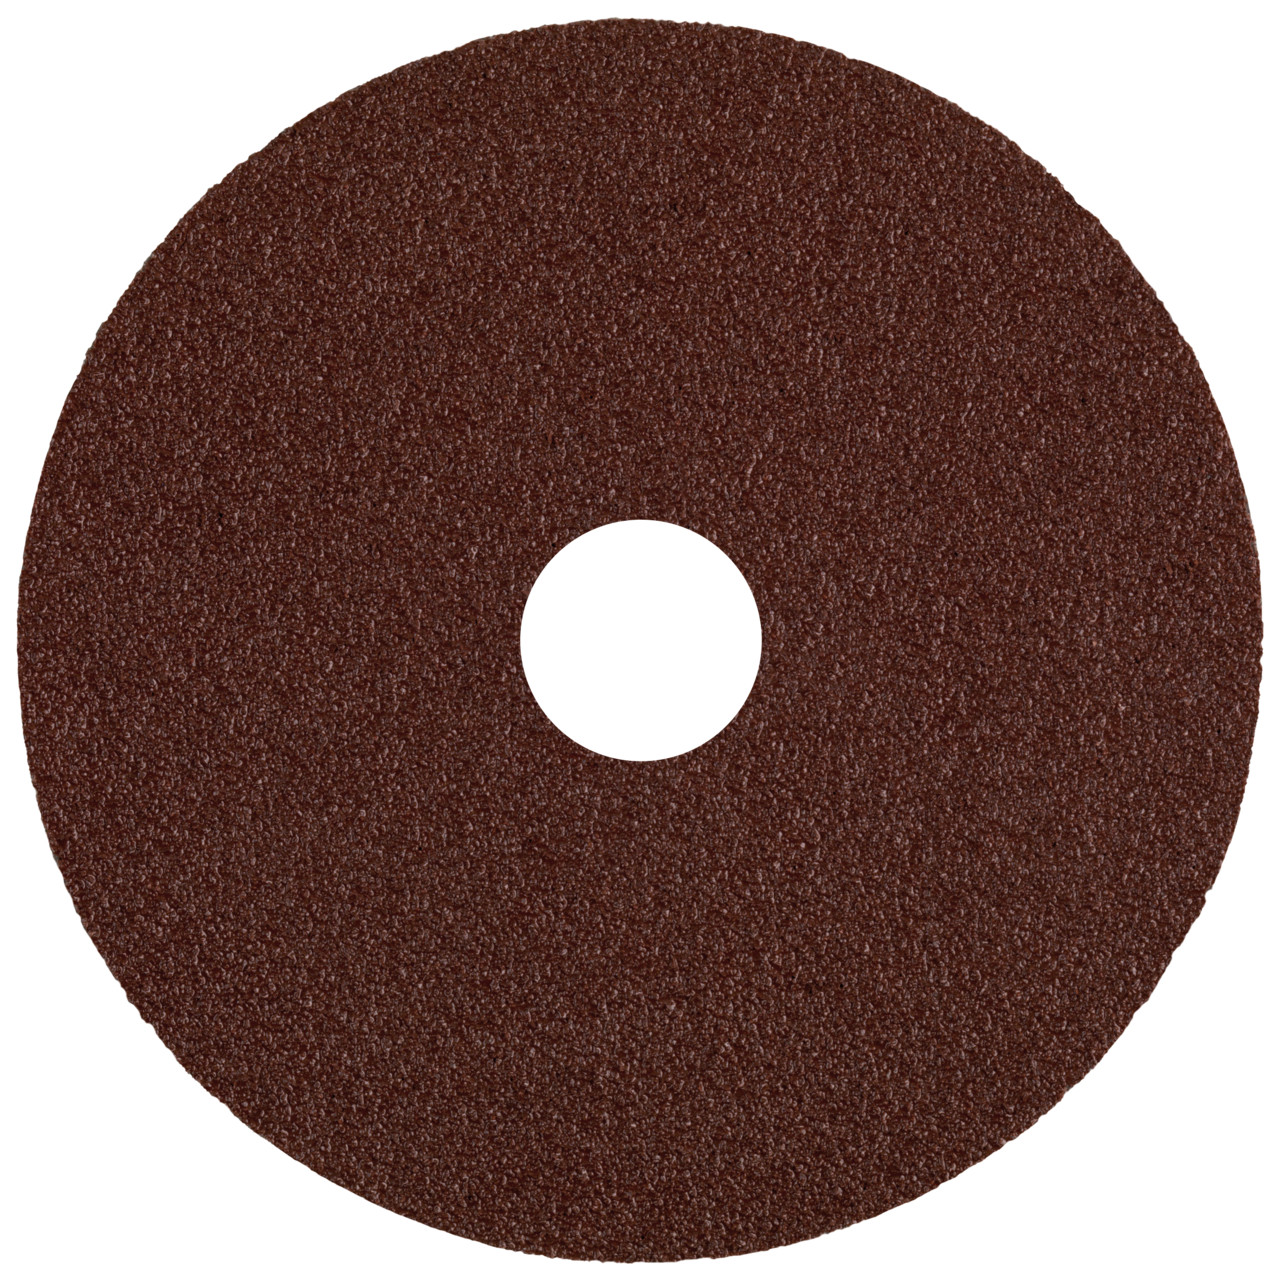 Tyrolit A-B02 V Vulcanised fibre disc DxH 180x22 For steel, non-ferrous metals and wood, P24, shape: DISC, Art. 34286507